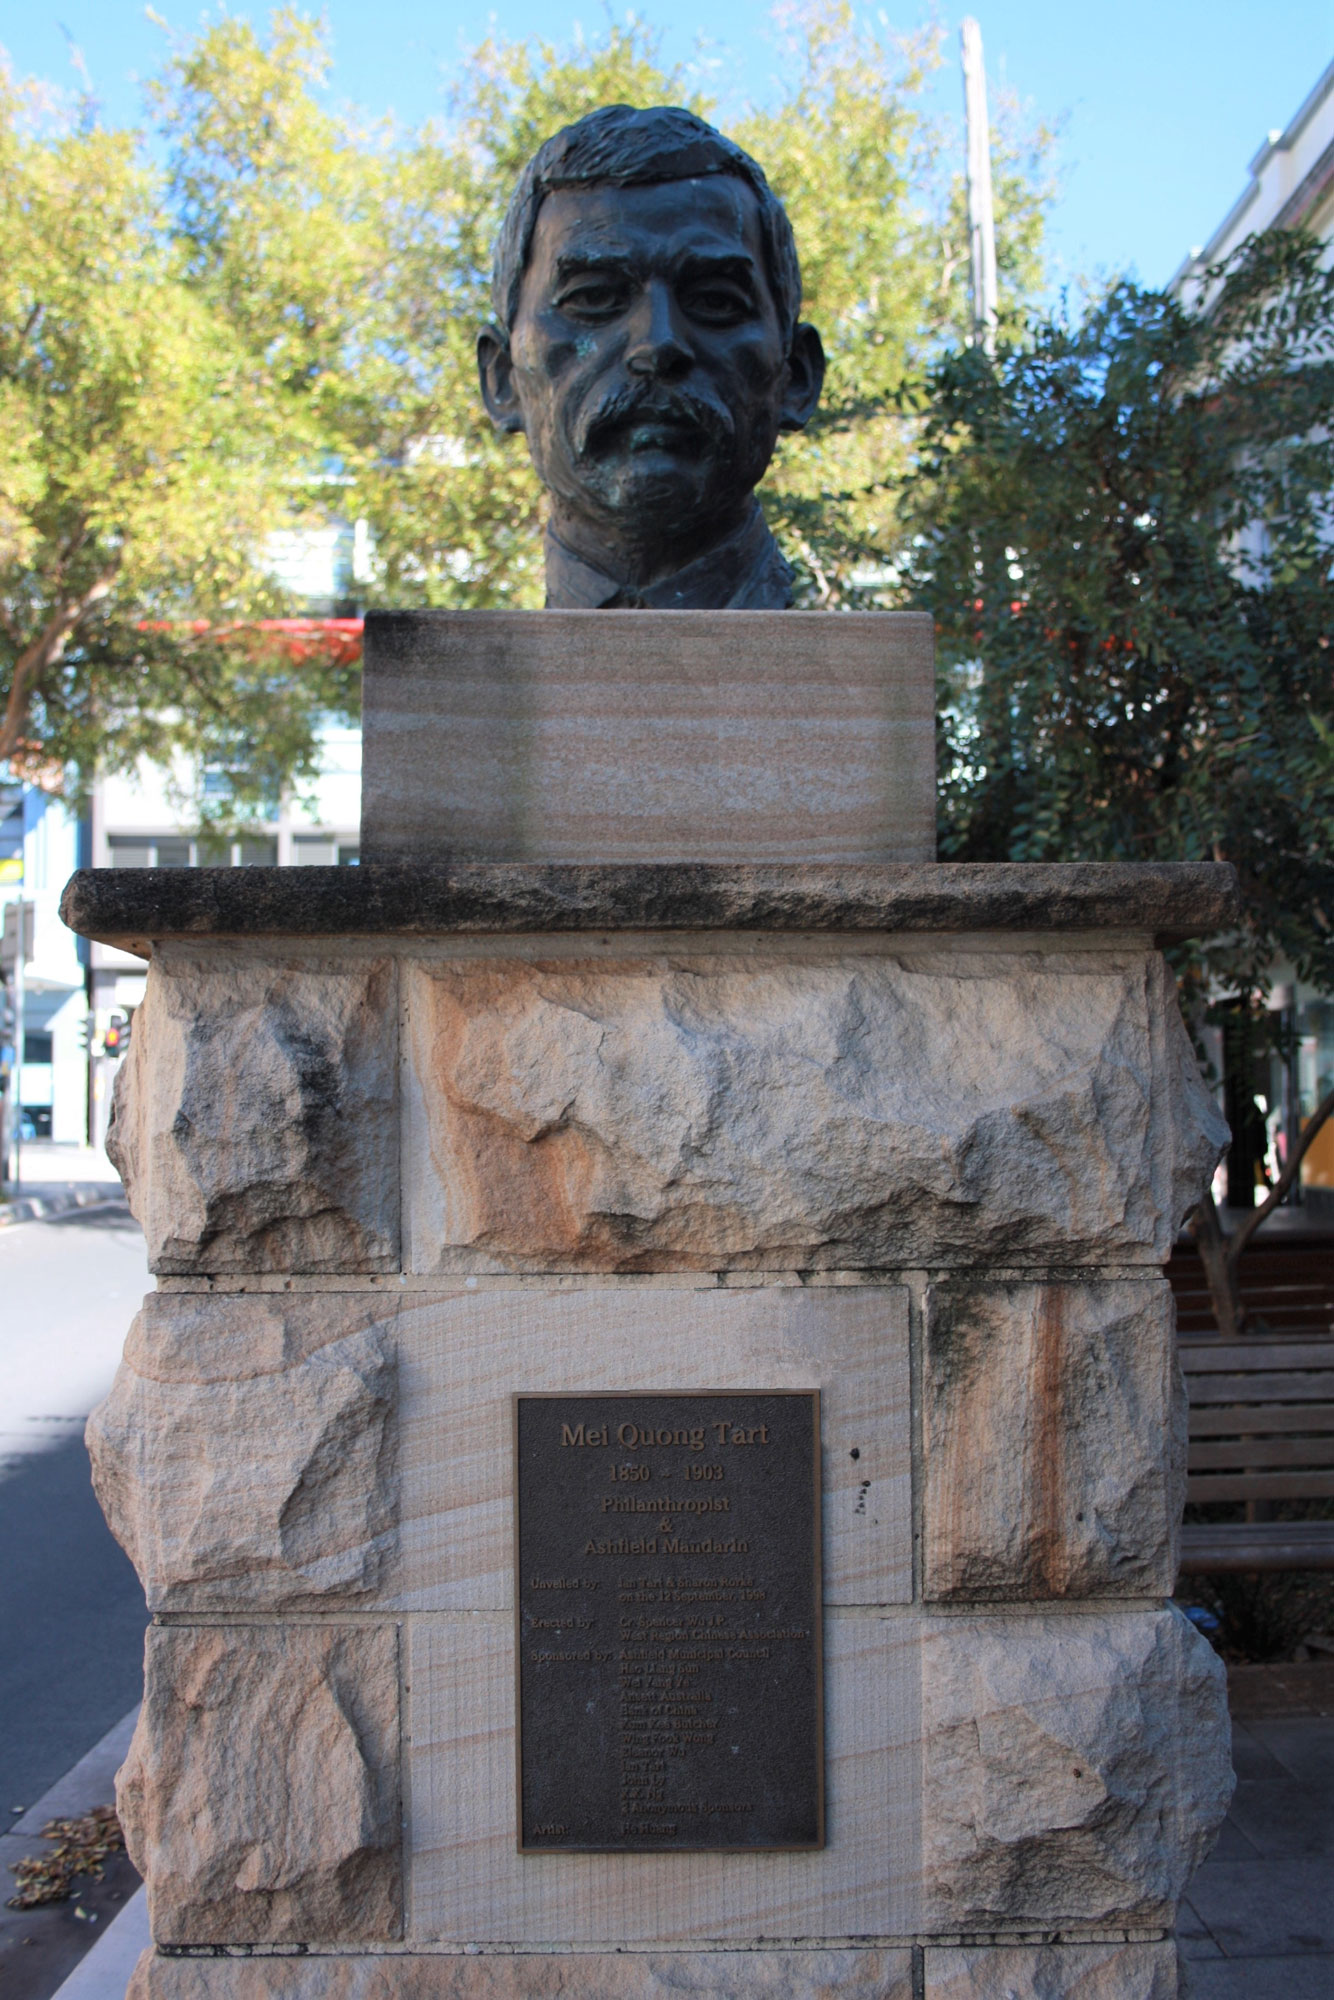 Monument commemorating Mei Quong Tart, Ashfield, Sydney